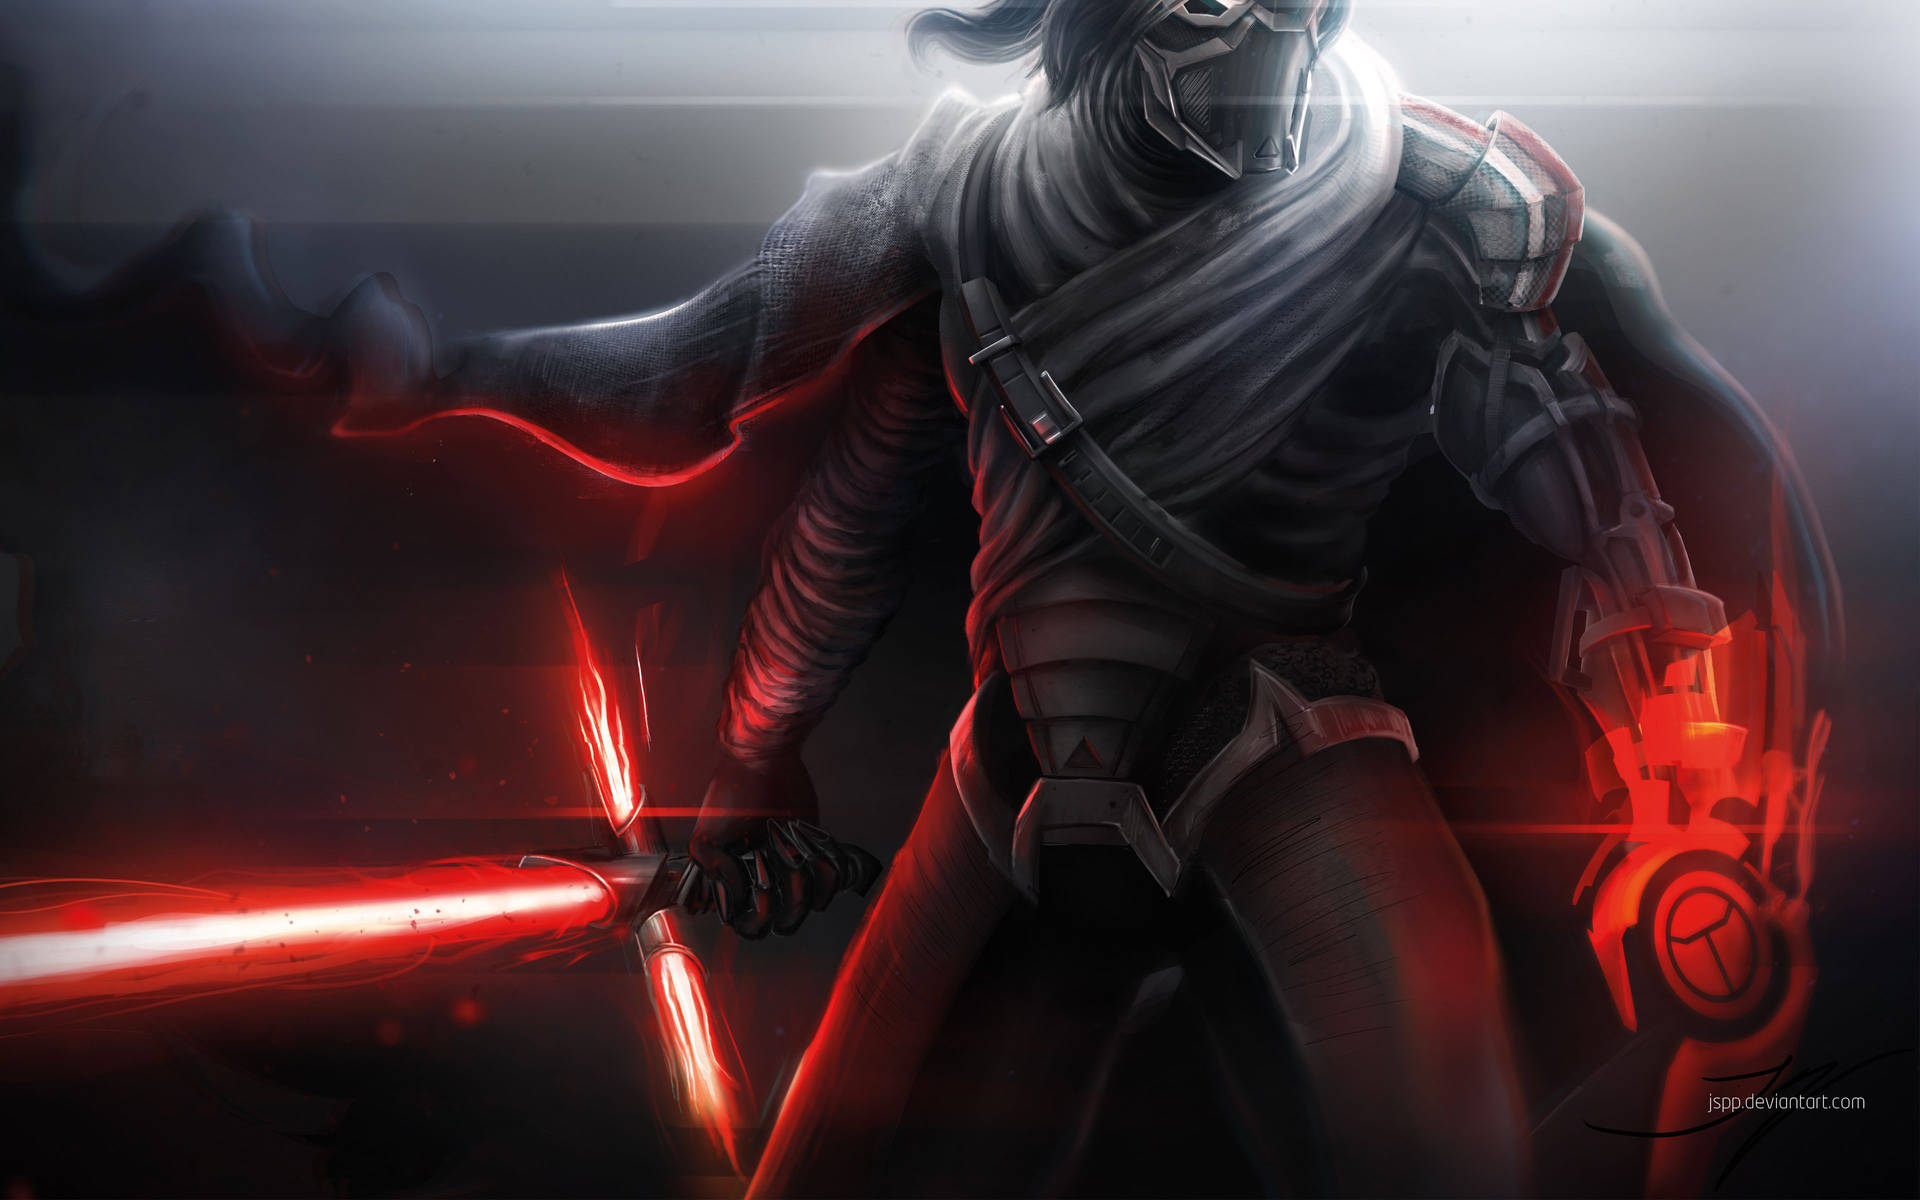 "The Powerful Dark Force of Kylo Ren" Wallpaper